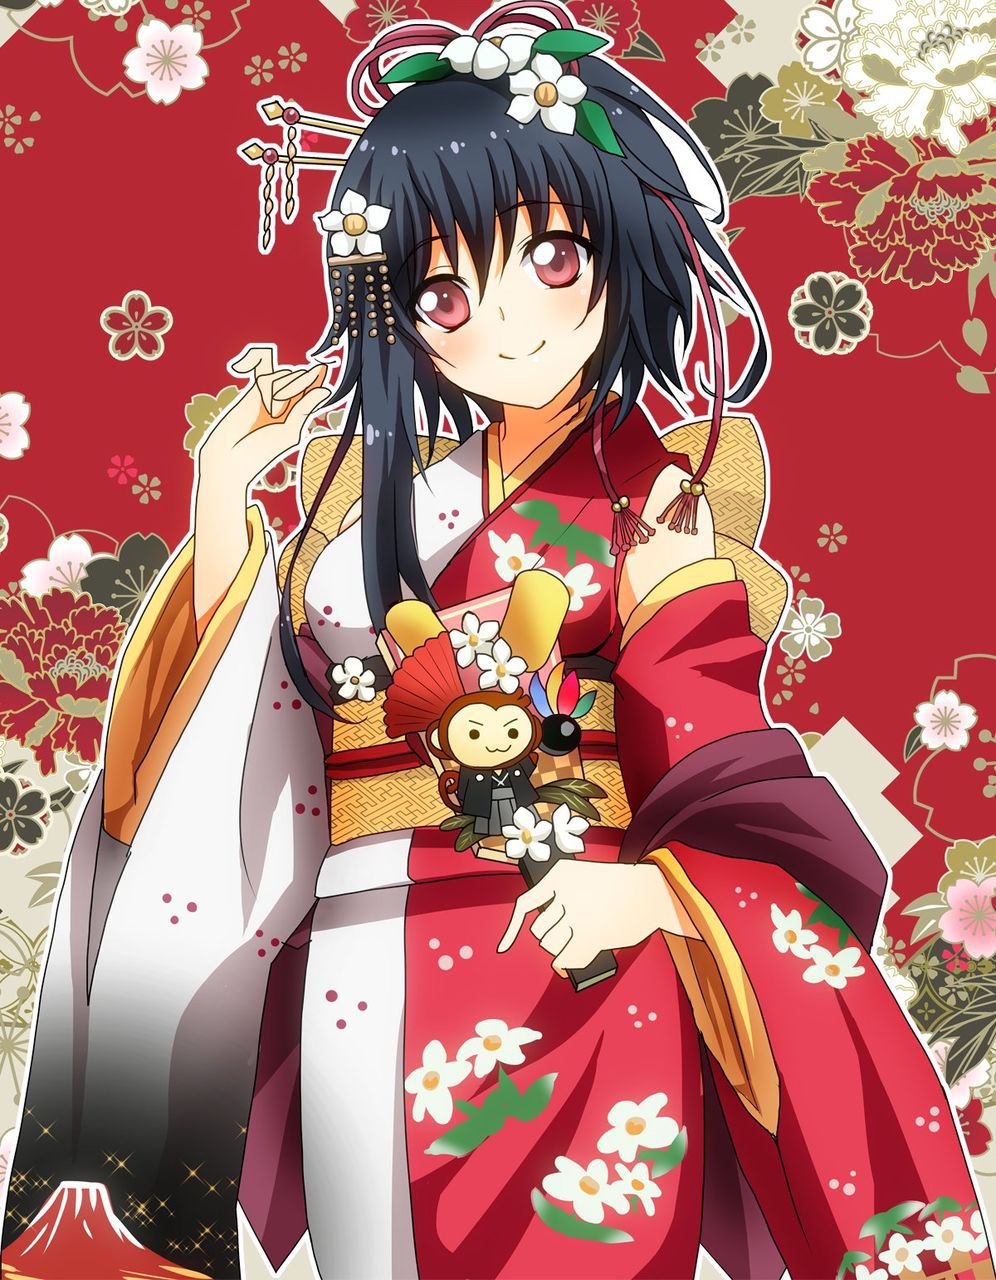 [2nd edition] Secondary image of a beautiful girl in kimono 16 [kimono] 33